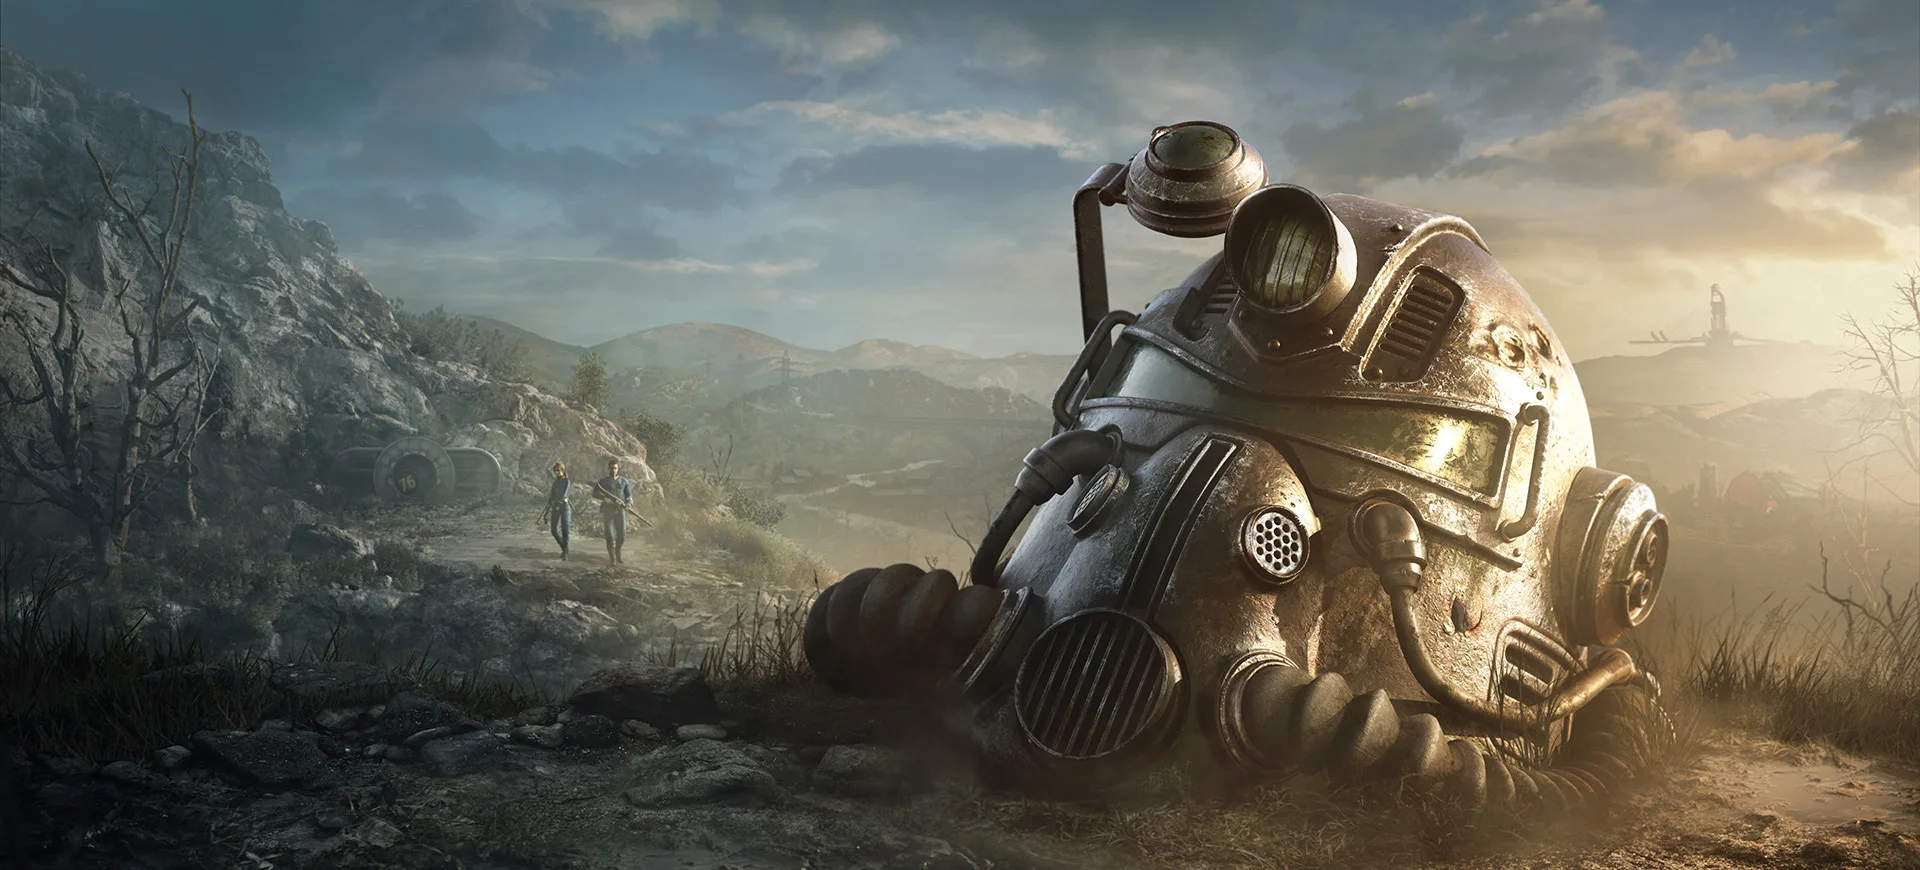 Fallout 76 パッチ12ノート 2019年8月20日